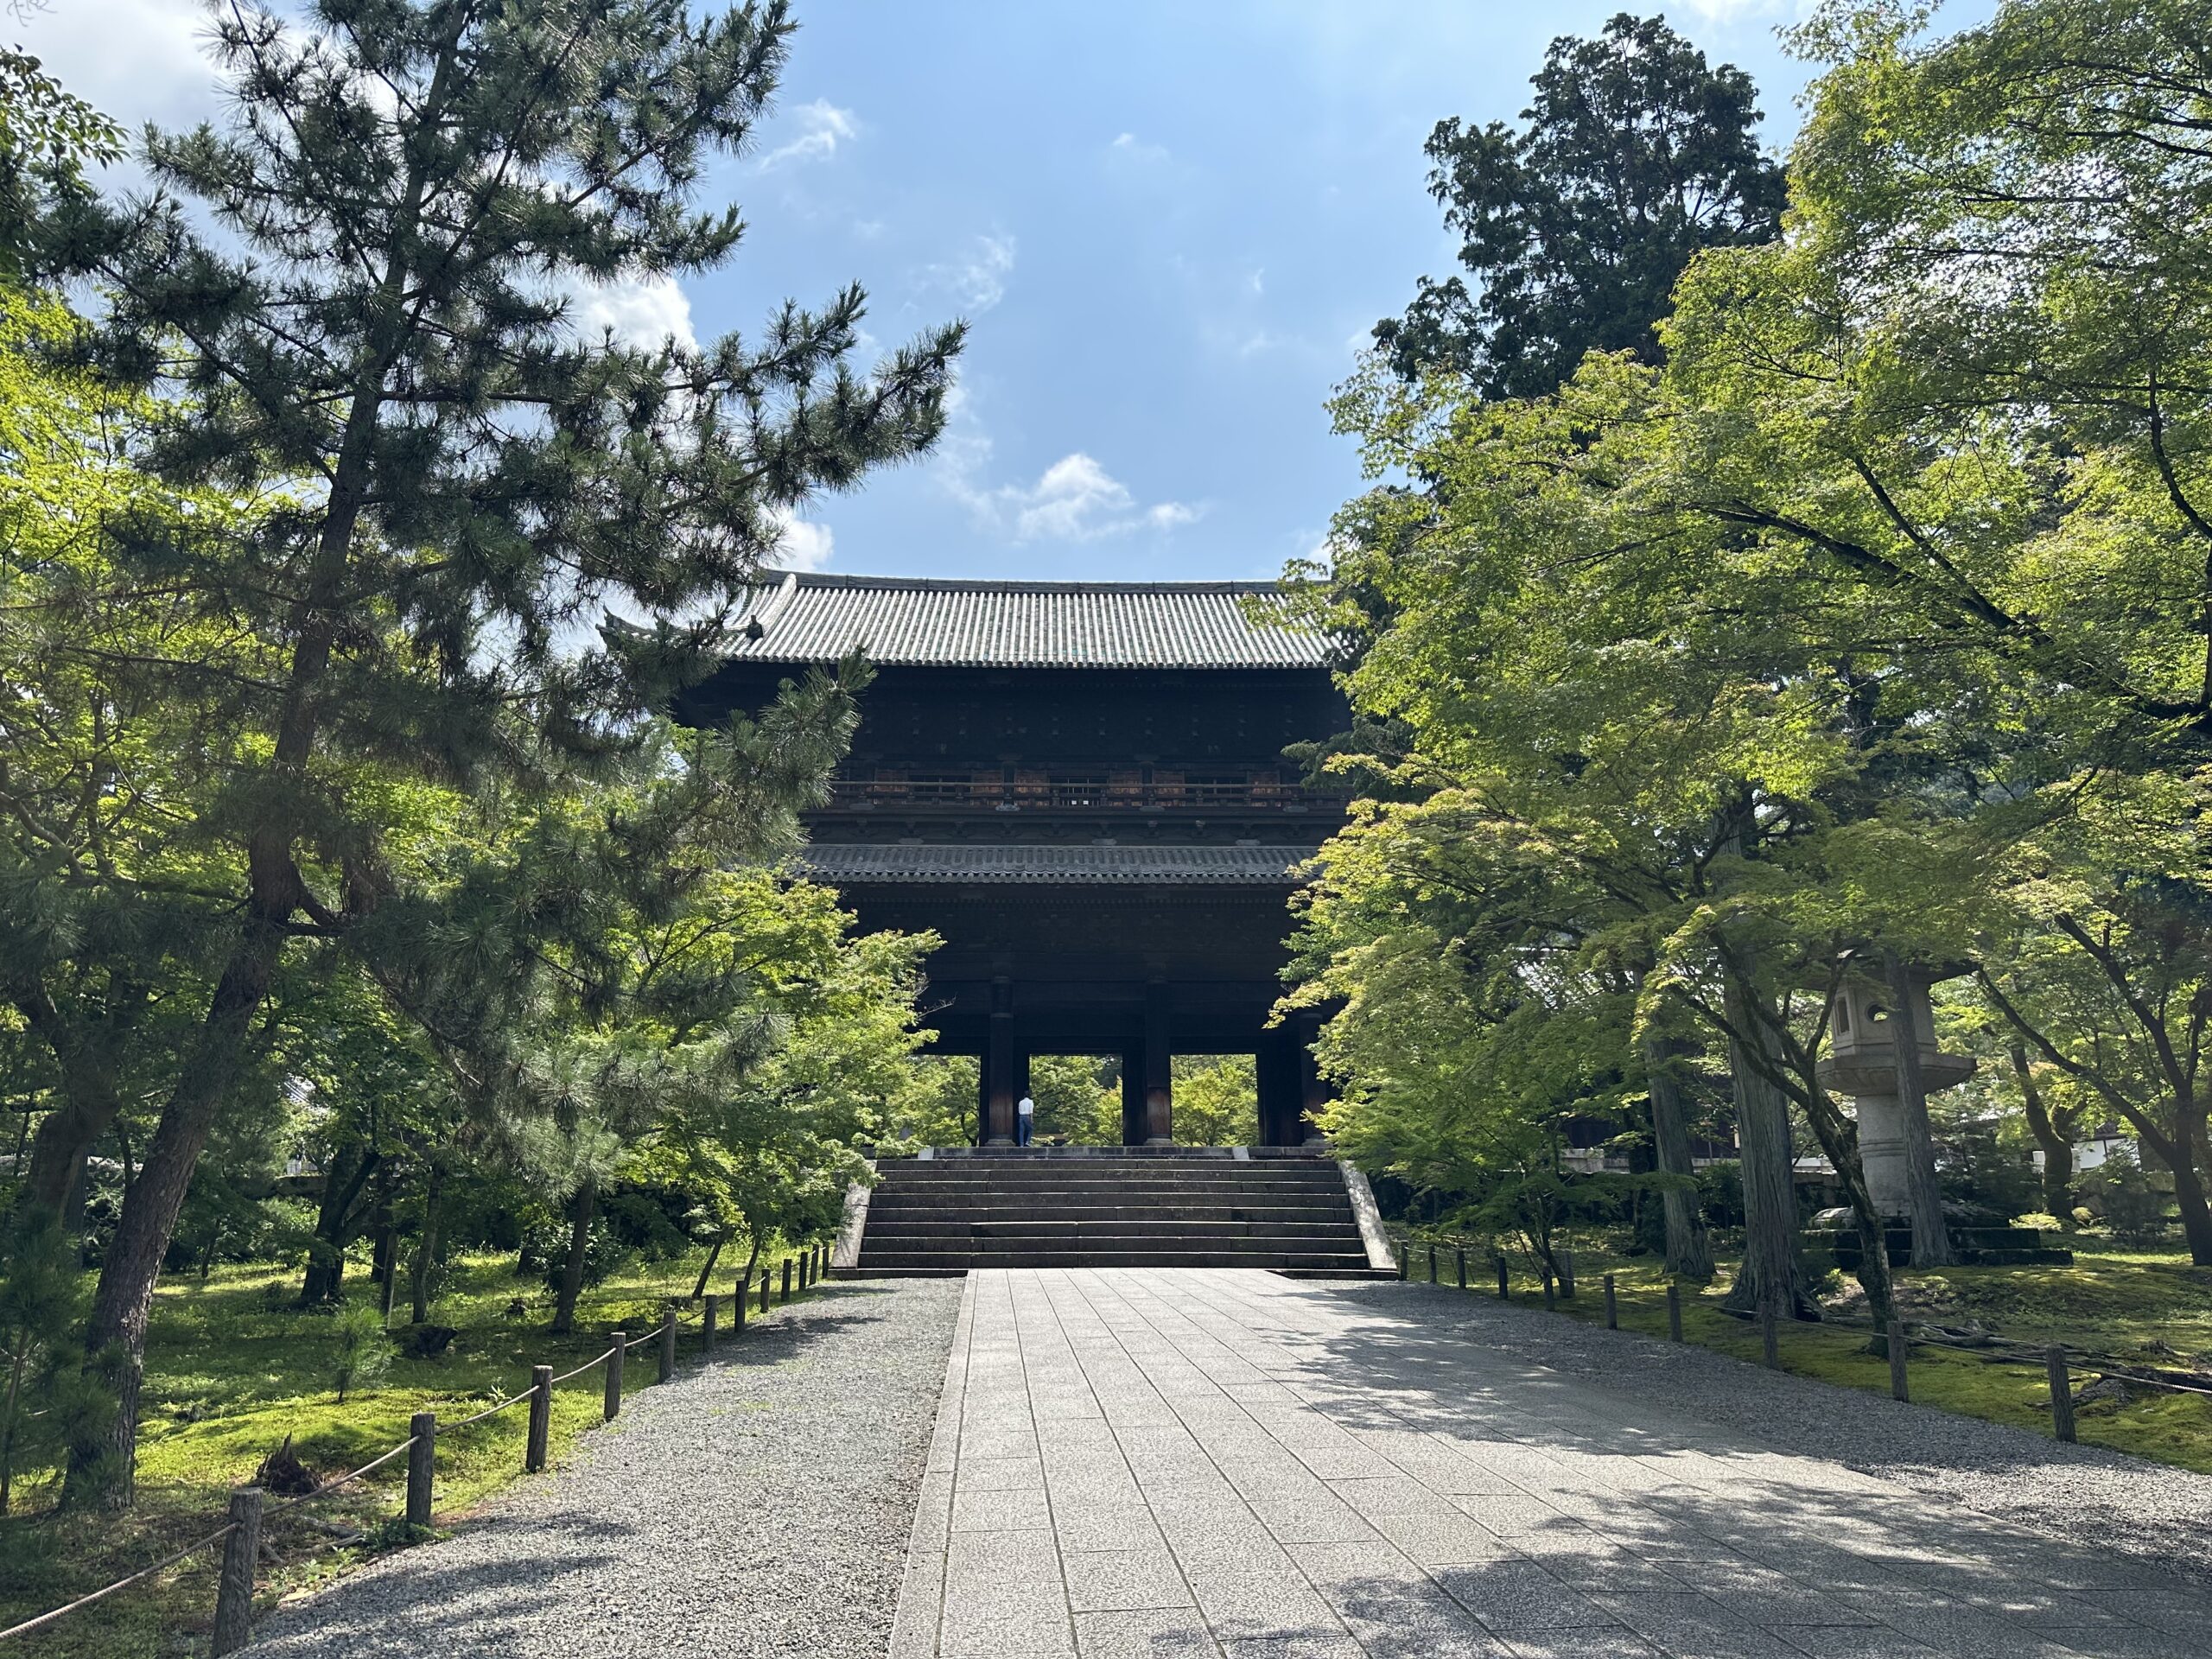 Nanzen-ji temple gate.